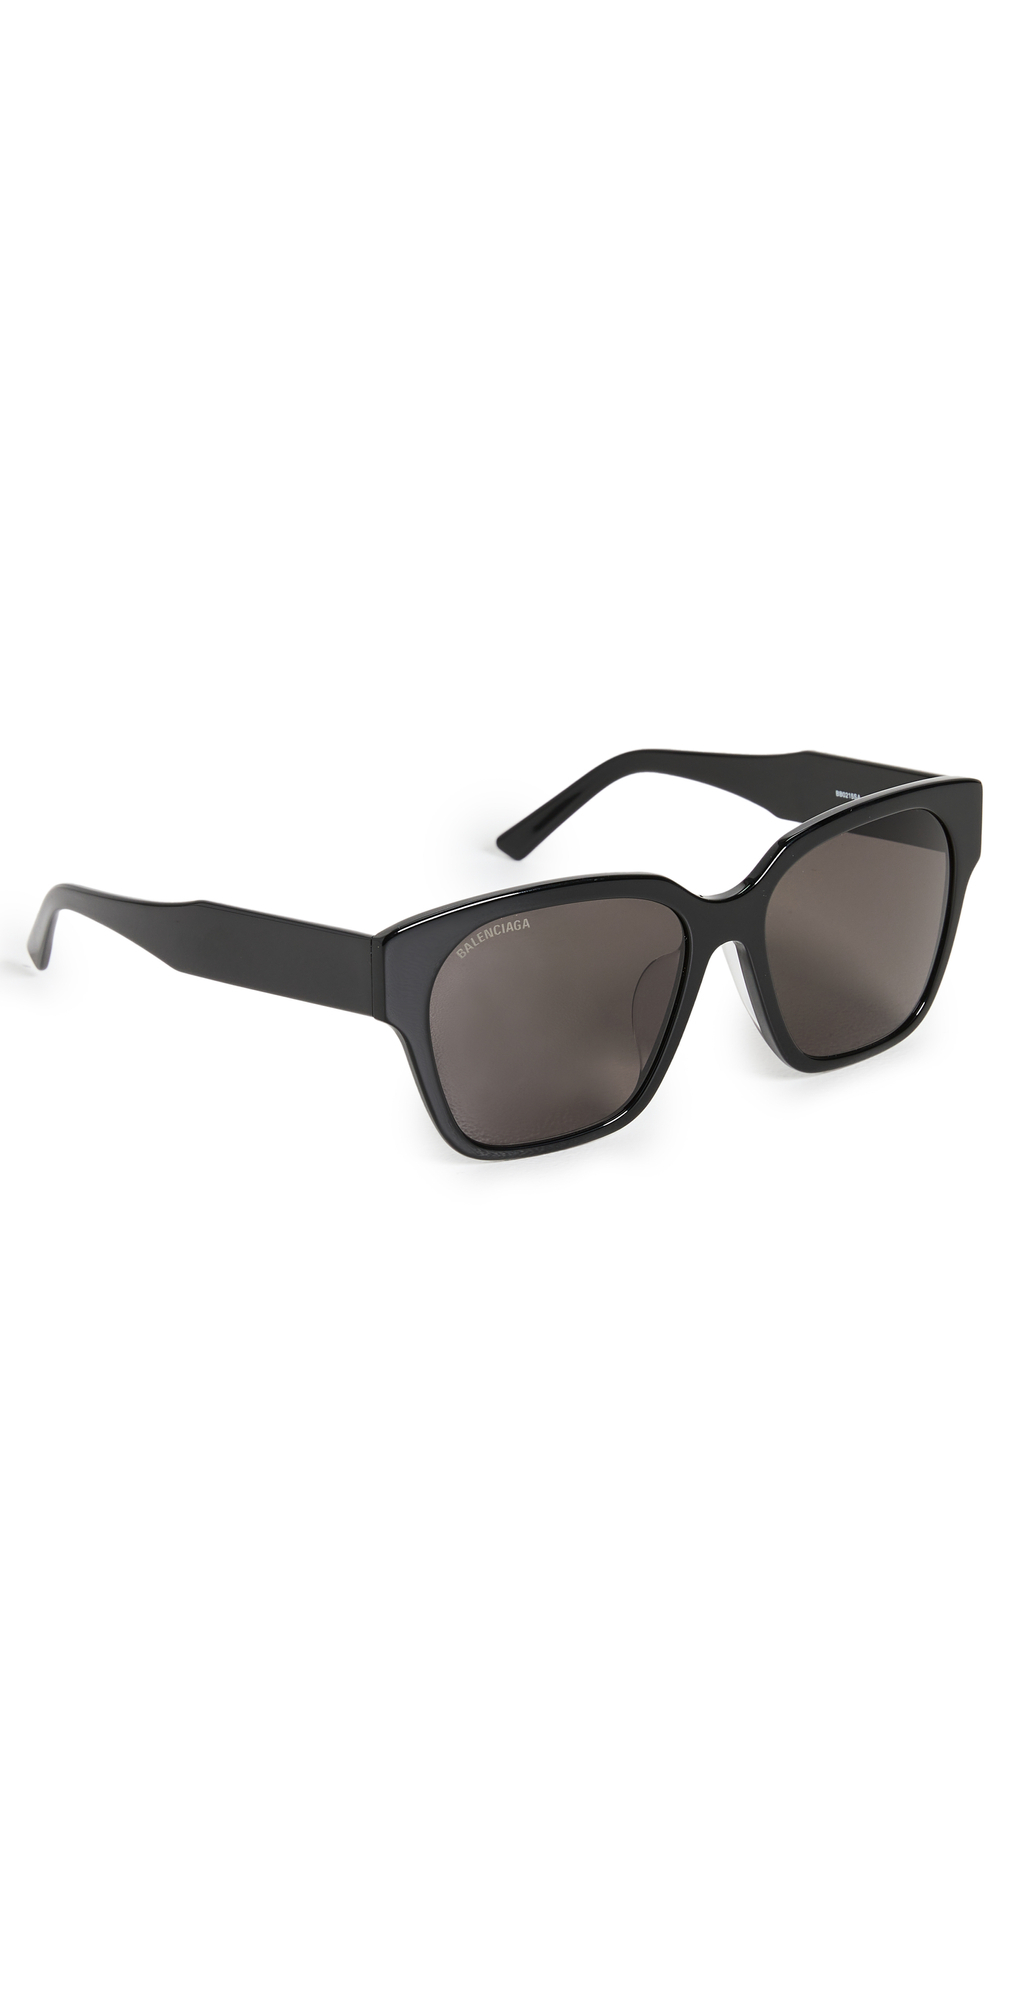 Balenciaga Flat Sunglasses in black / grey